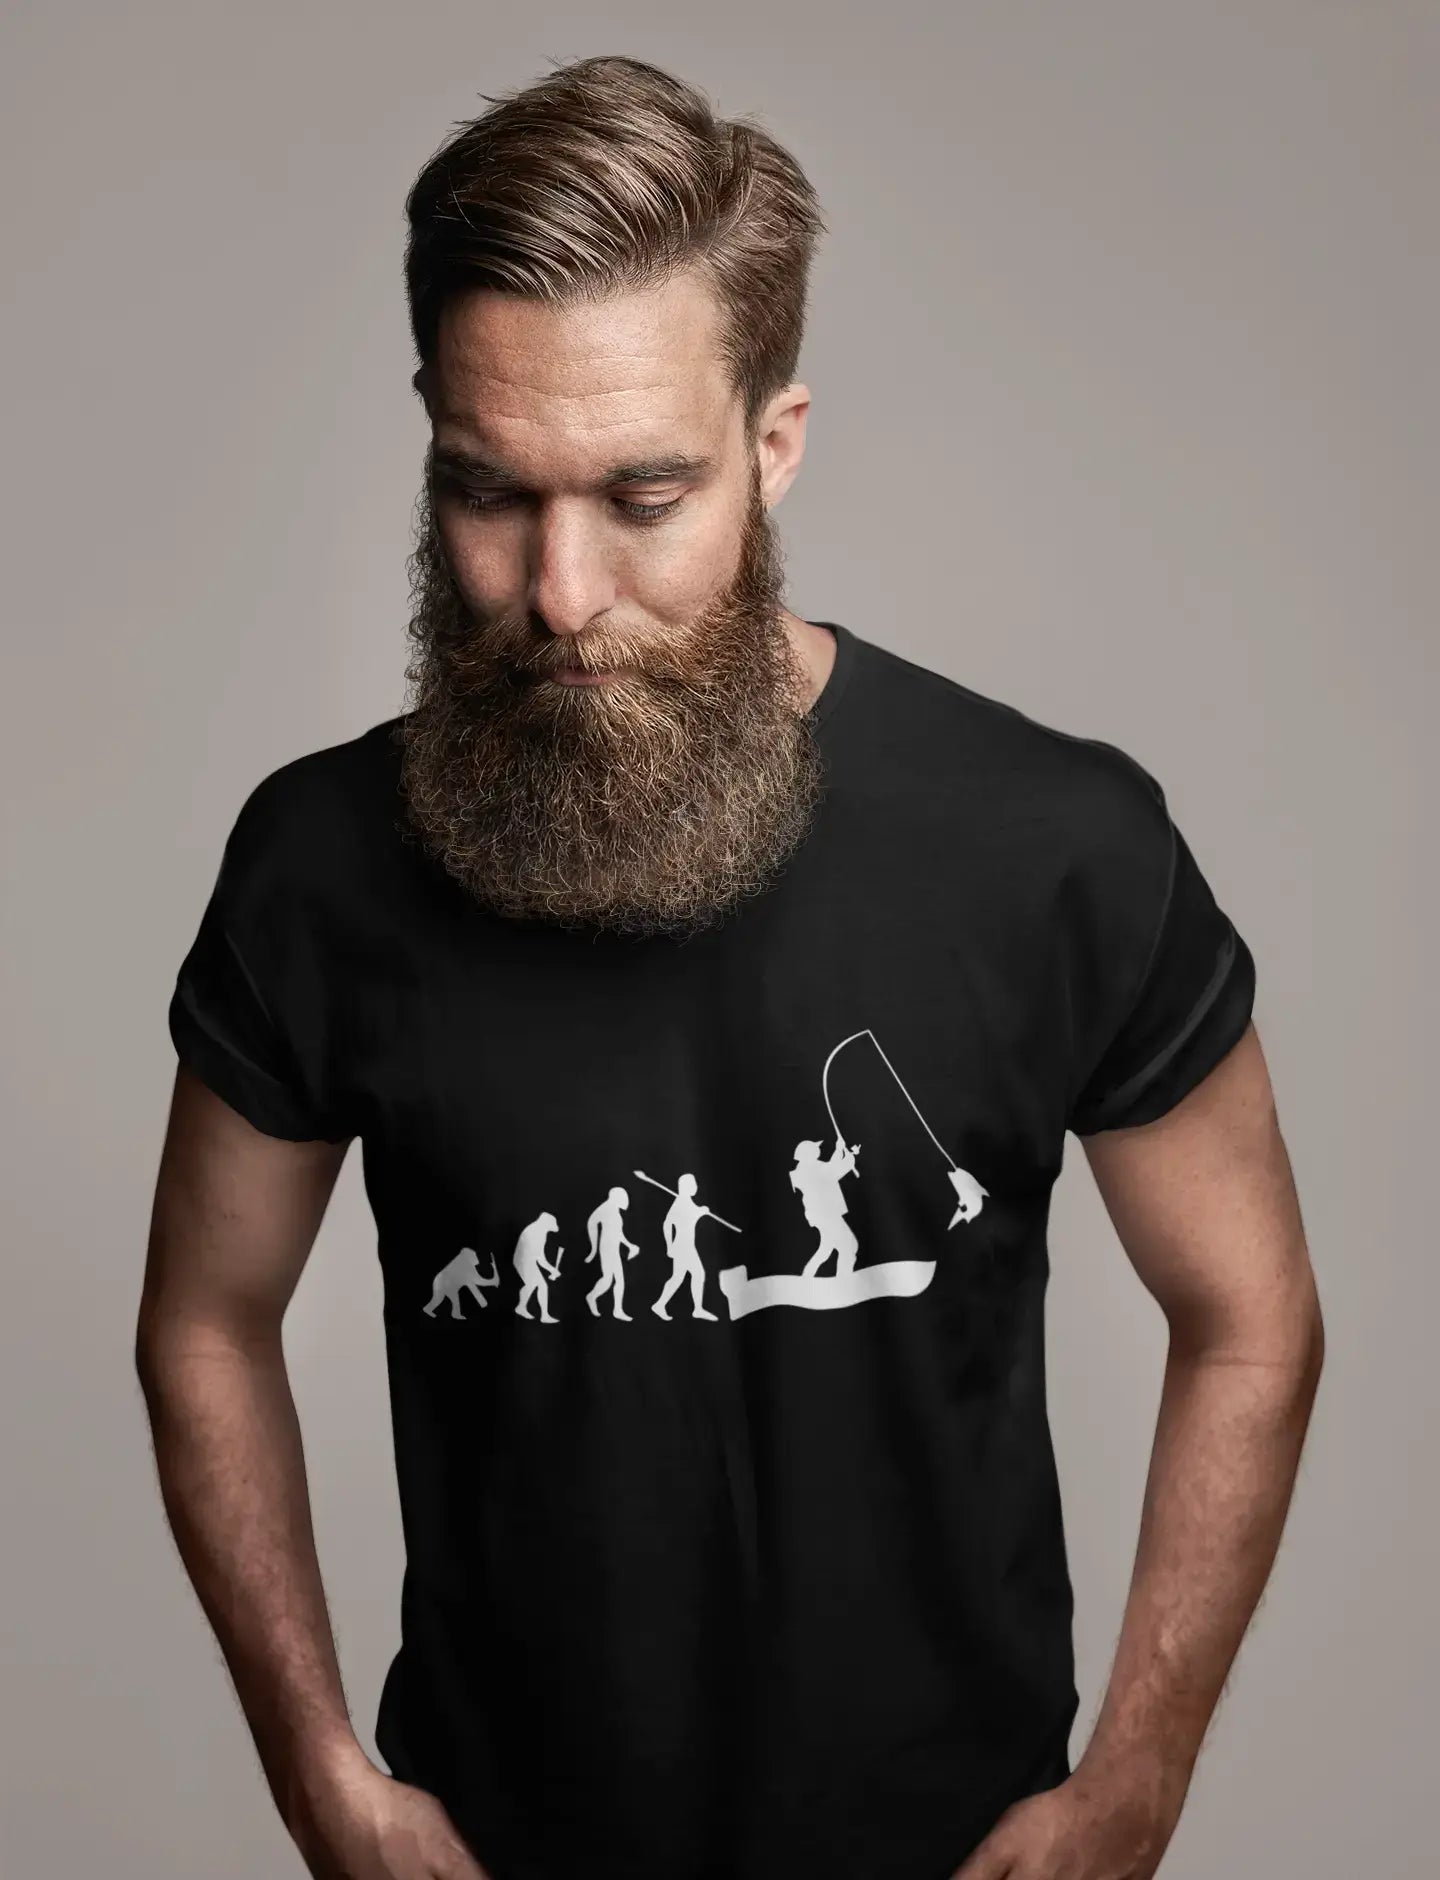 ULTRABASIC - Graphic Printed Men's Evolution of the Fishing Boat T-Shirt Burgundy